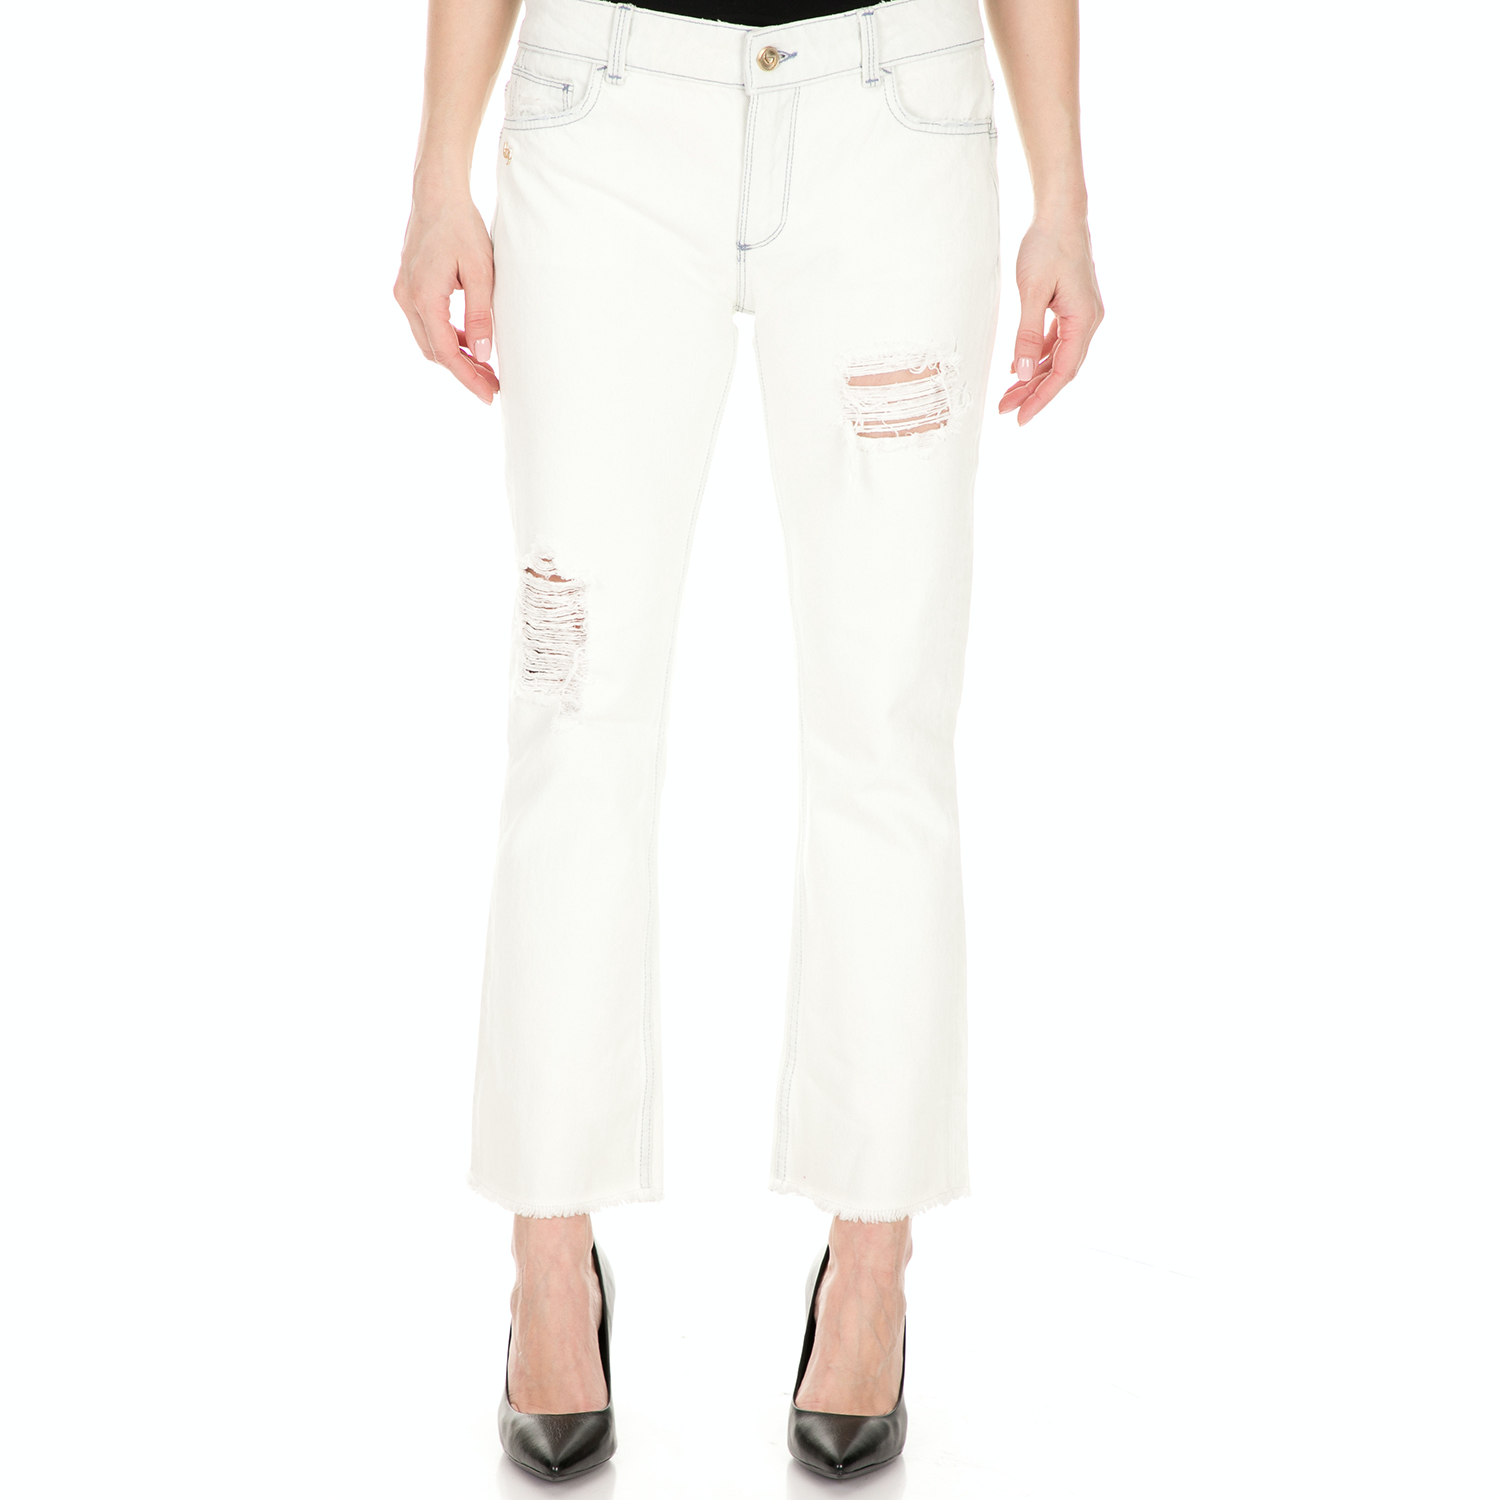 BYBLOS - Γυναικειο τζιν παντελόνι BYBLOS λευκό Γυναικεία/Ρούχα/Τζίν/Straight